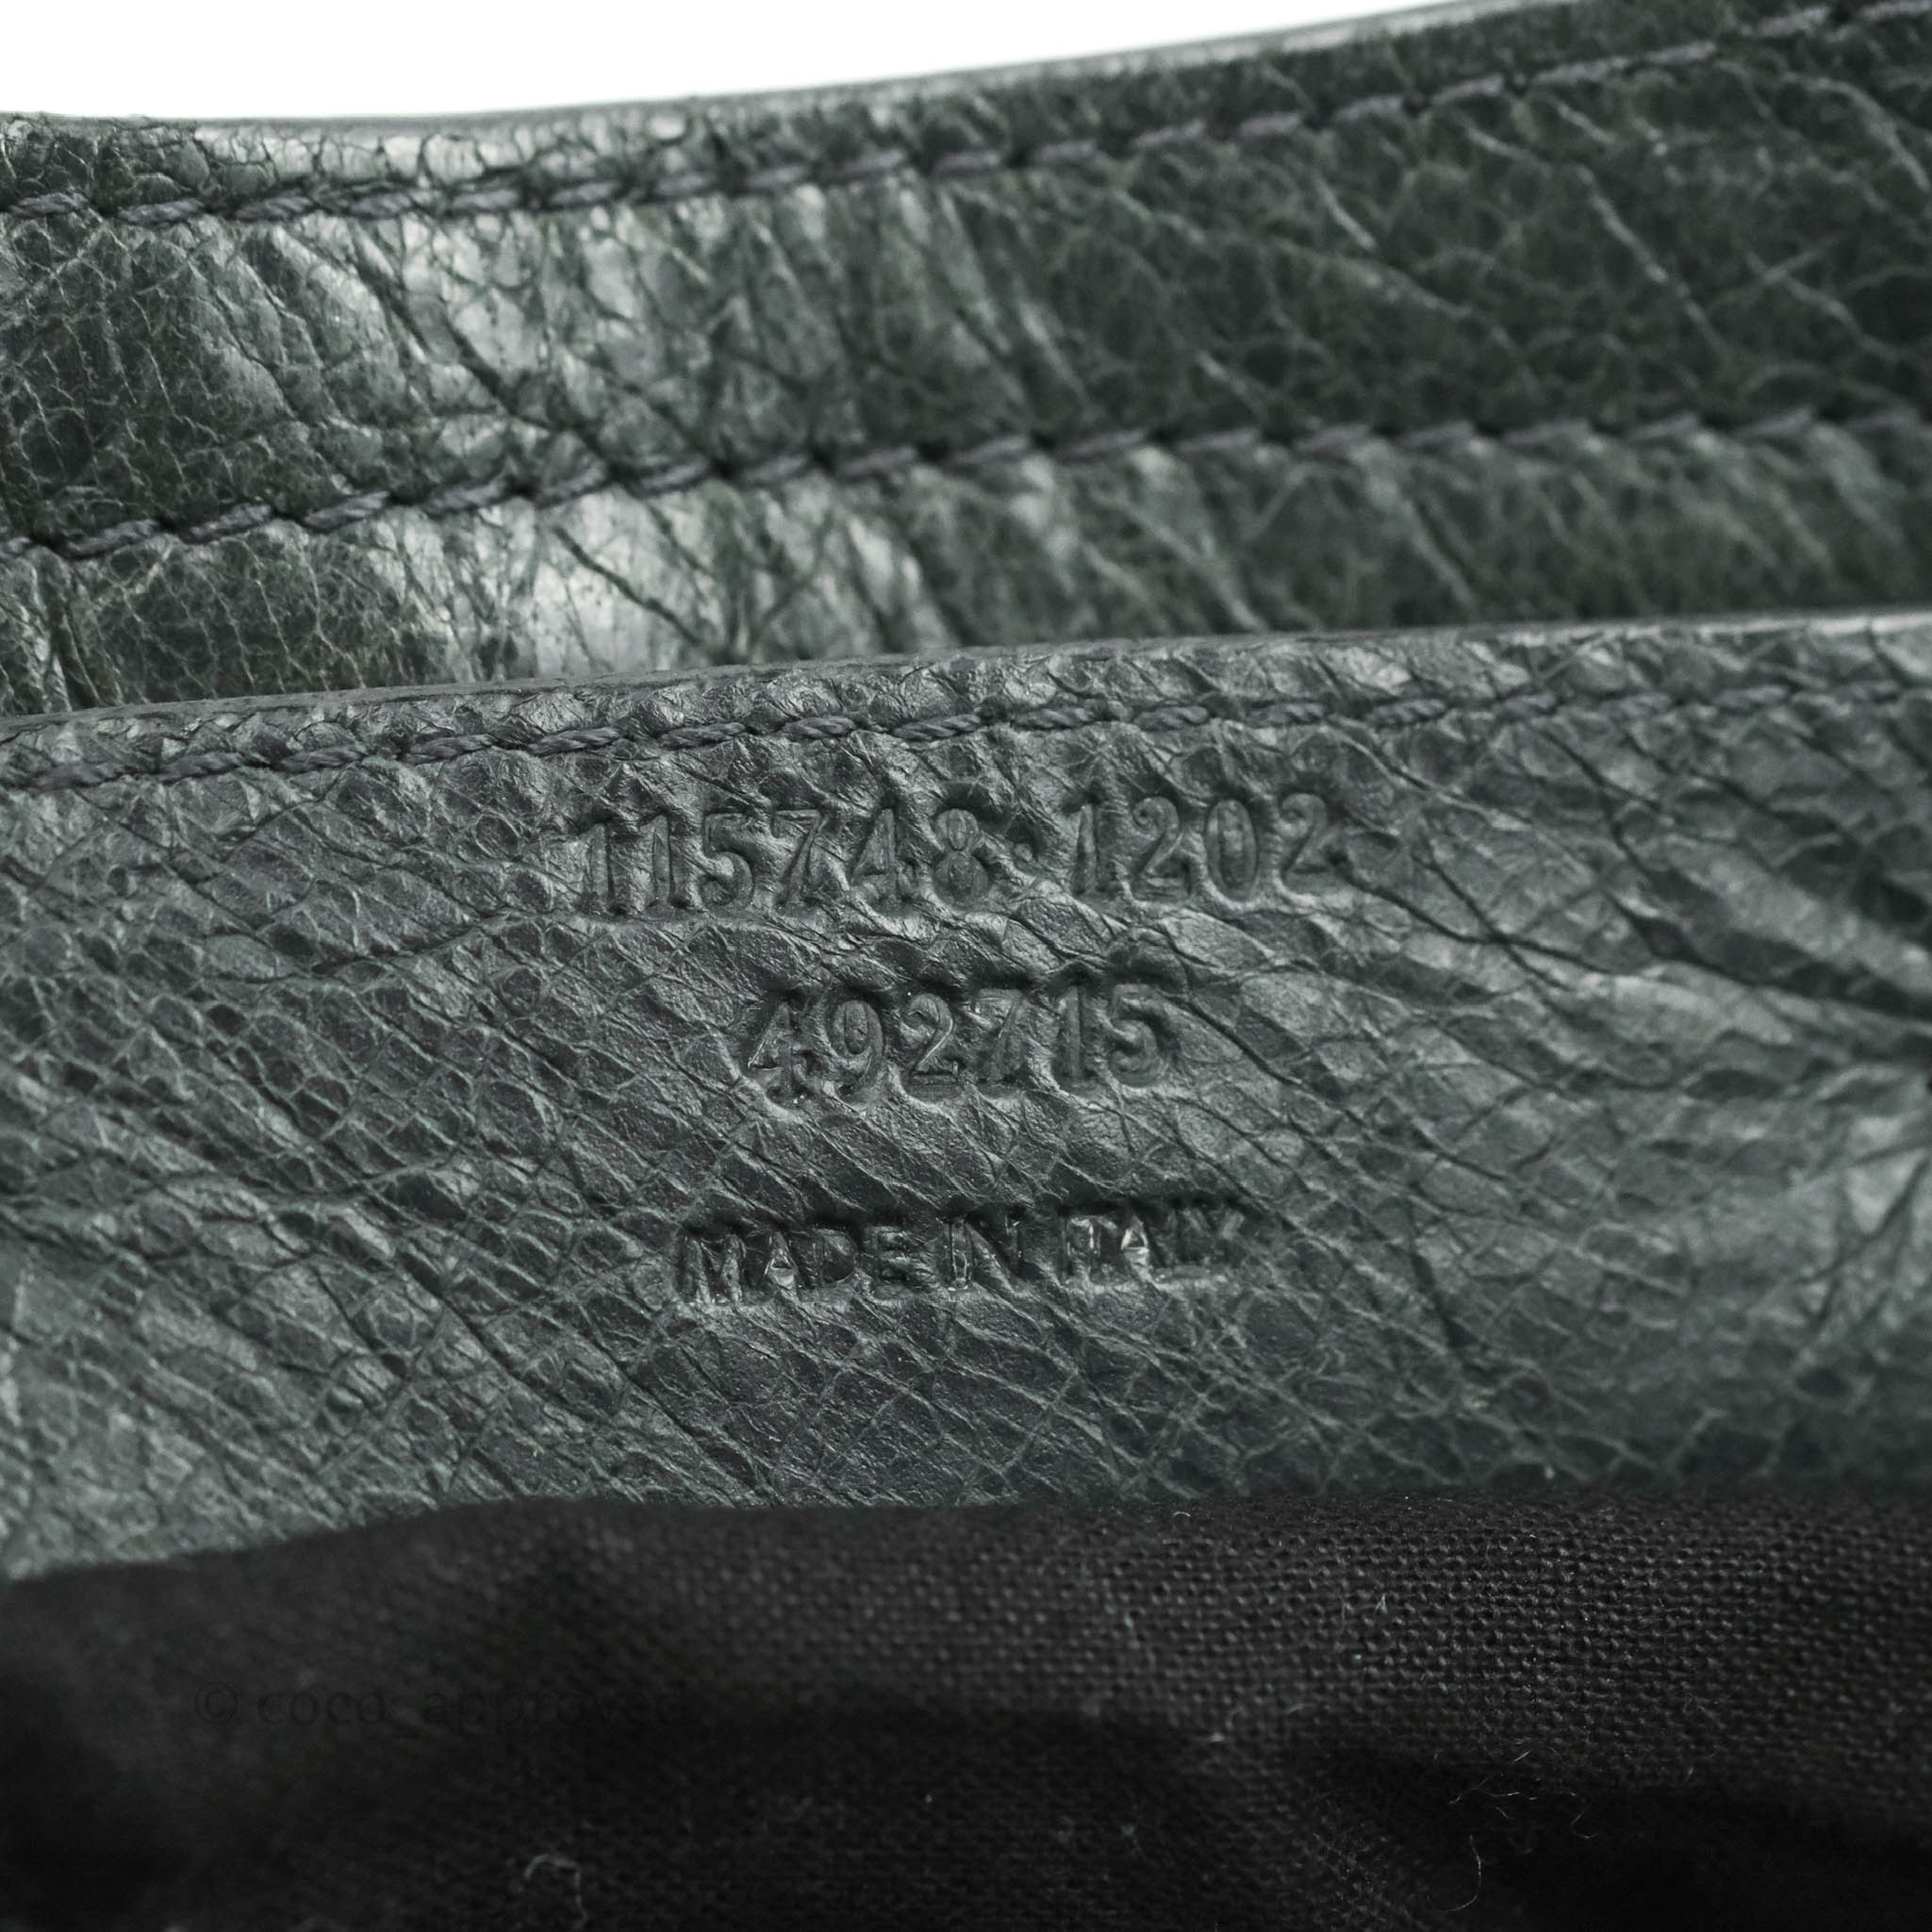 Balenciaga Velo Classic Regular Hardware Bag in Black, REVOIR